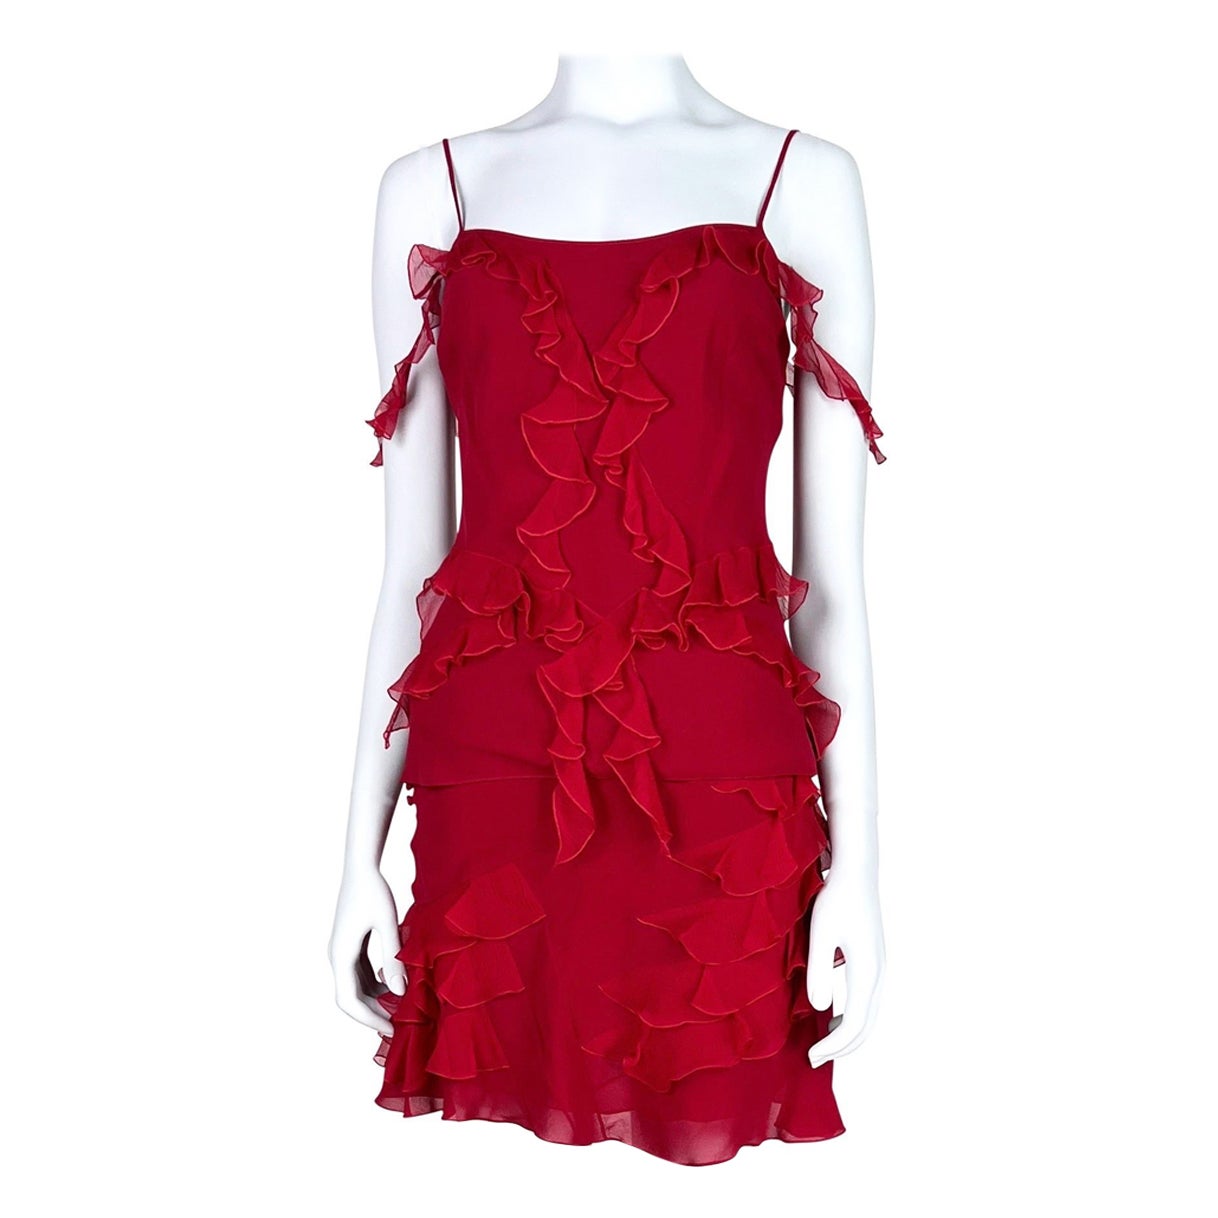 Dior by John Galliano Fall 2004 Red Ruffled Silk Set